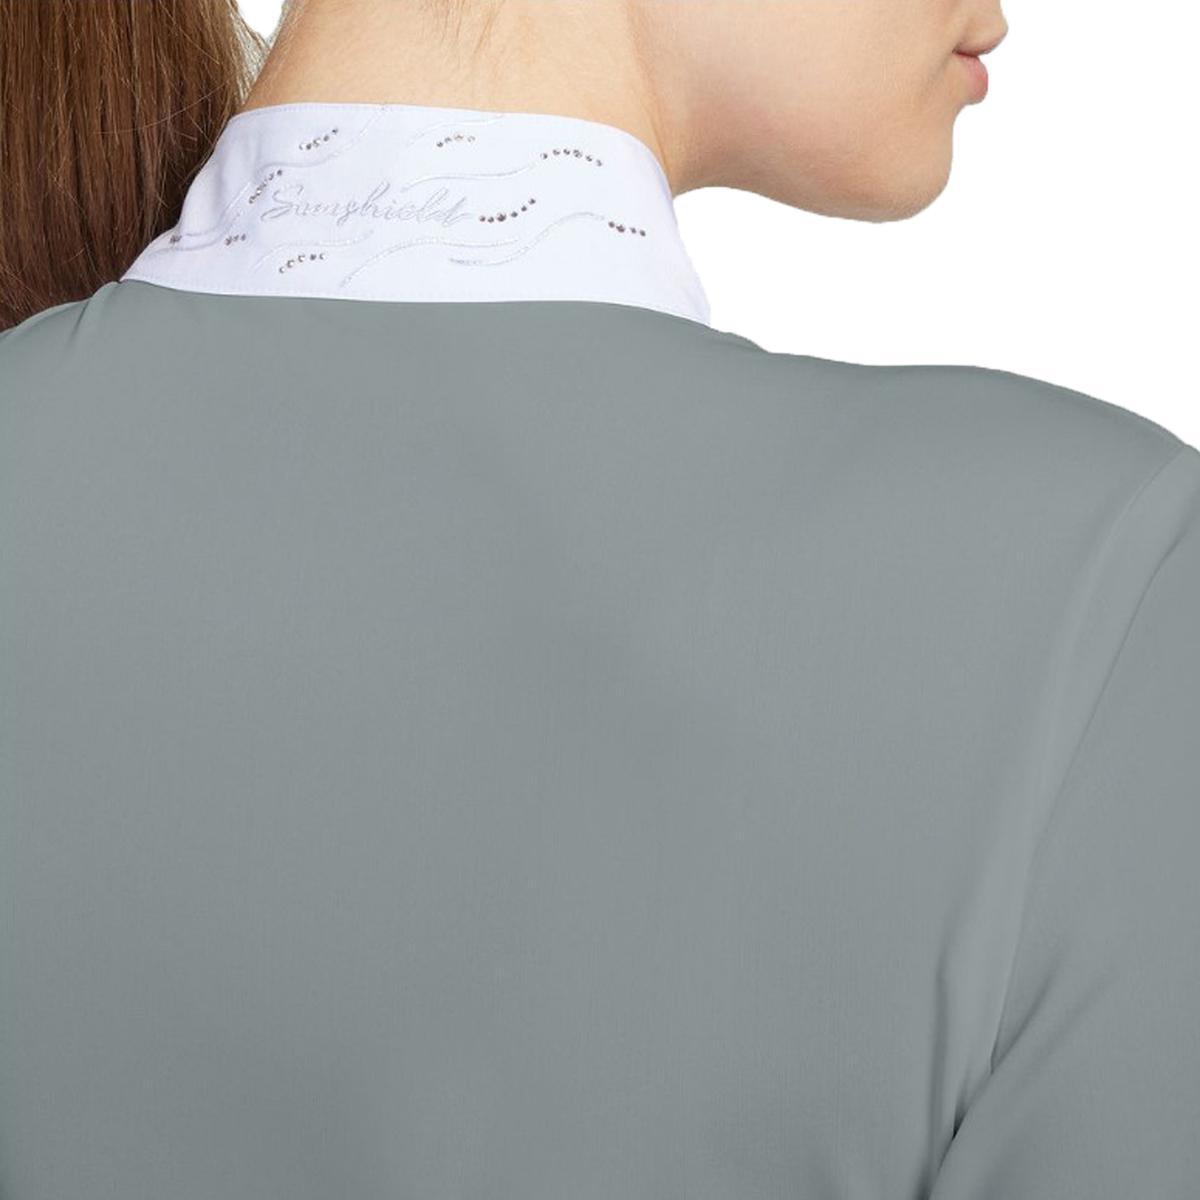 Samshield Women's Julia Intarsia Short Sleeve Show Shirt